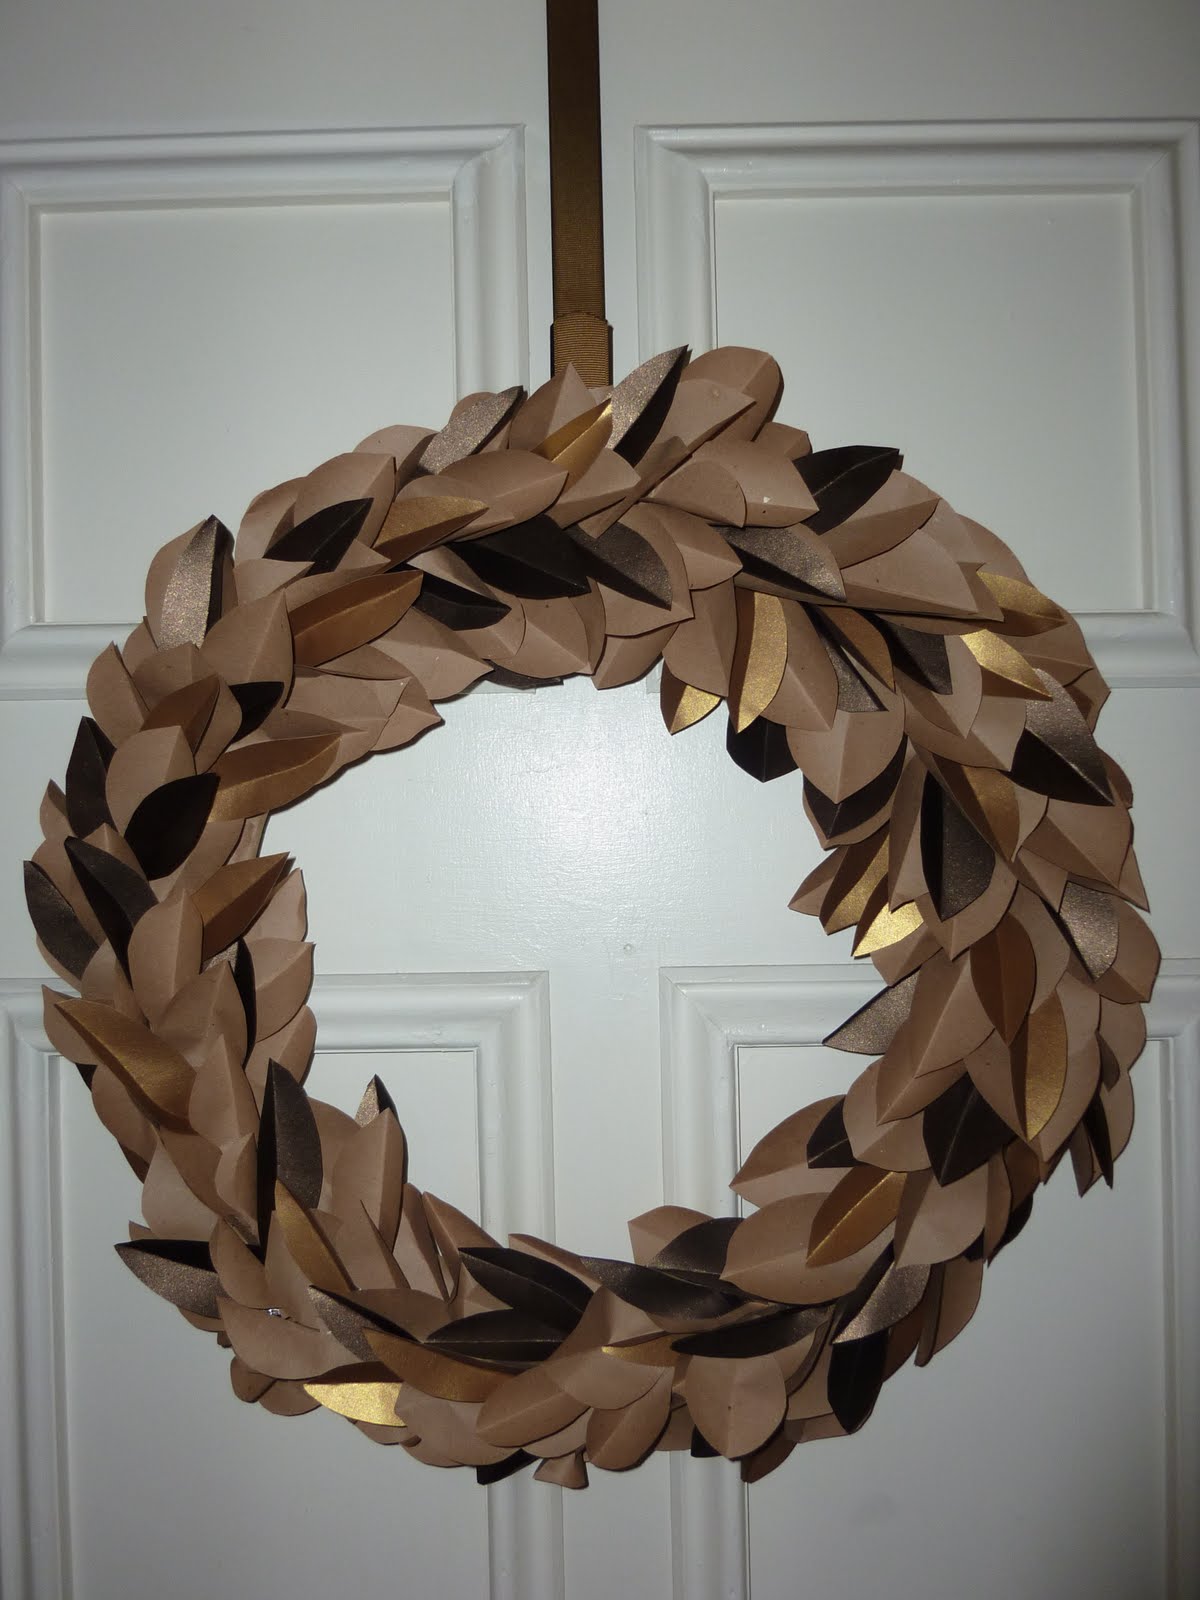 Meet Me in Philadelphia: Fall Crafts, Round 1: Paper Bag Wreath